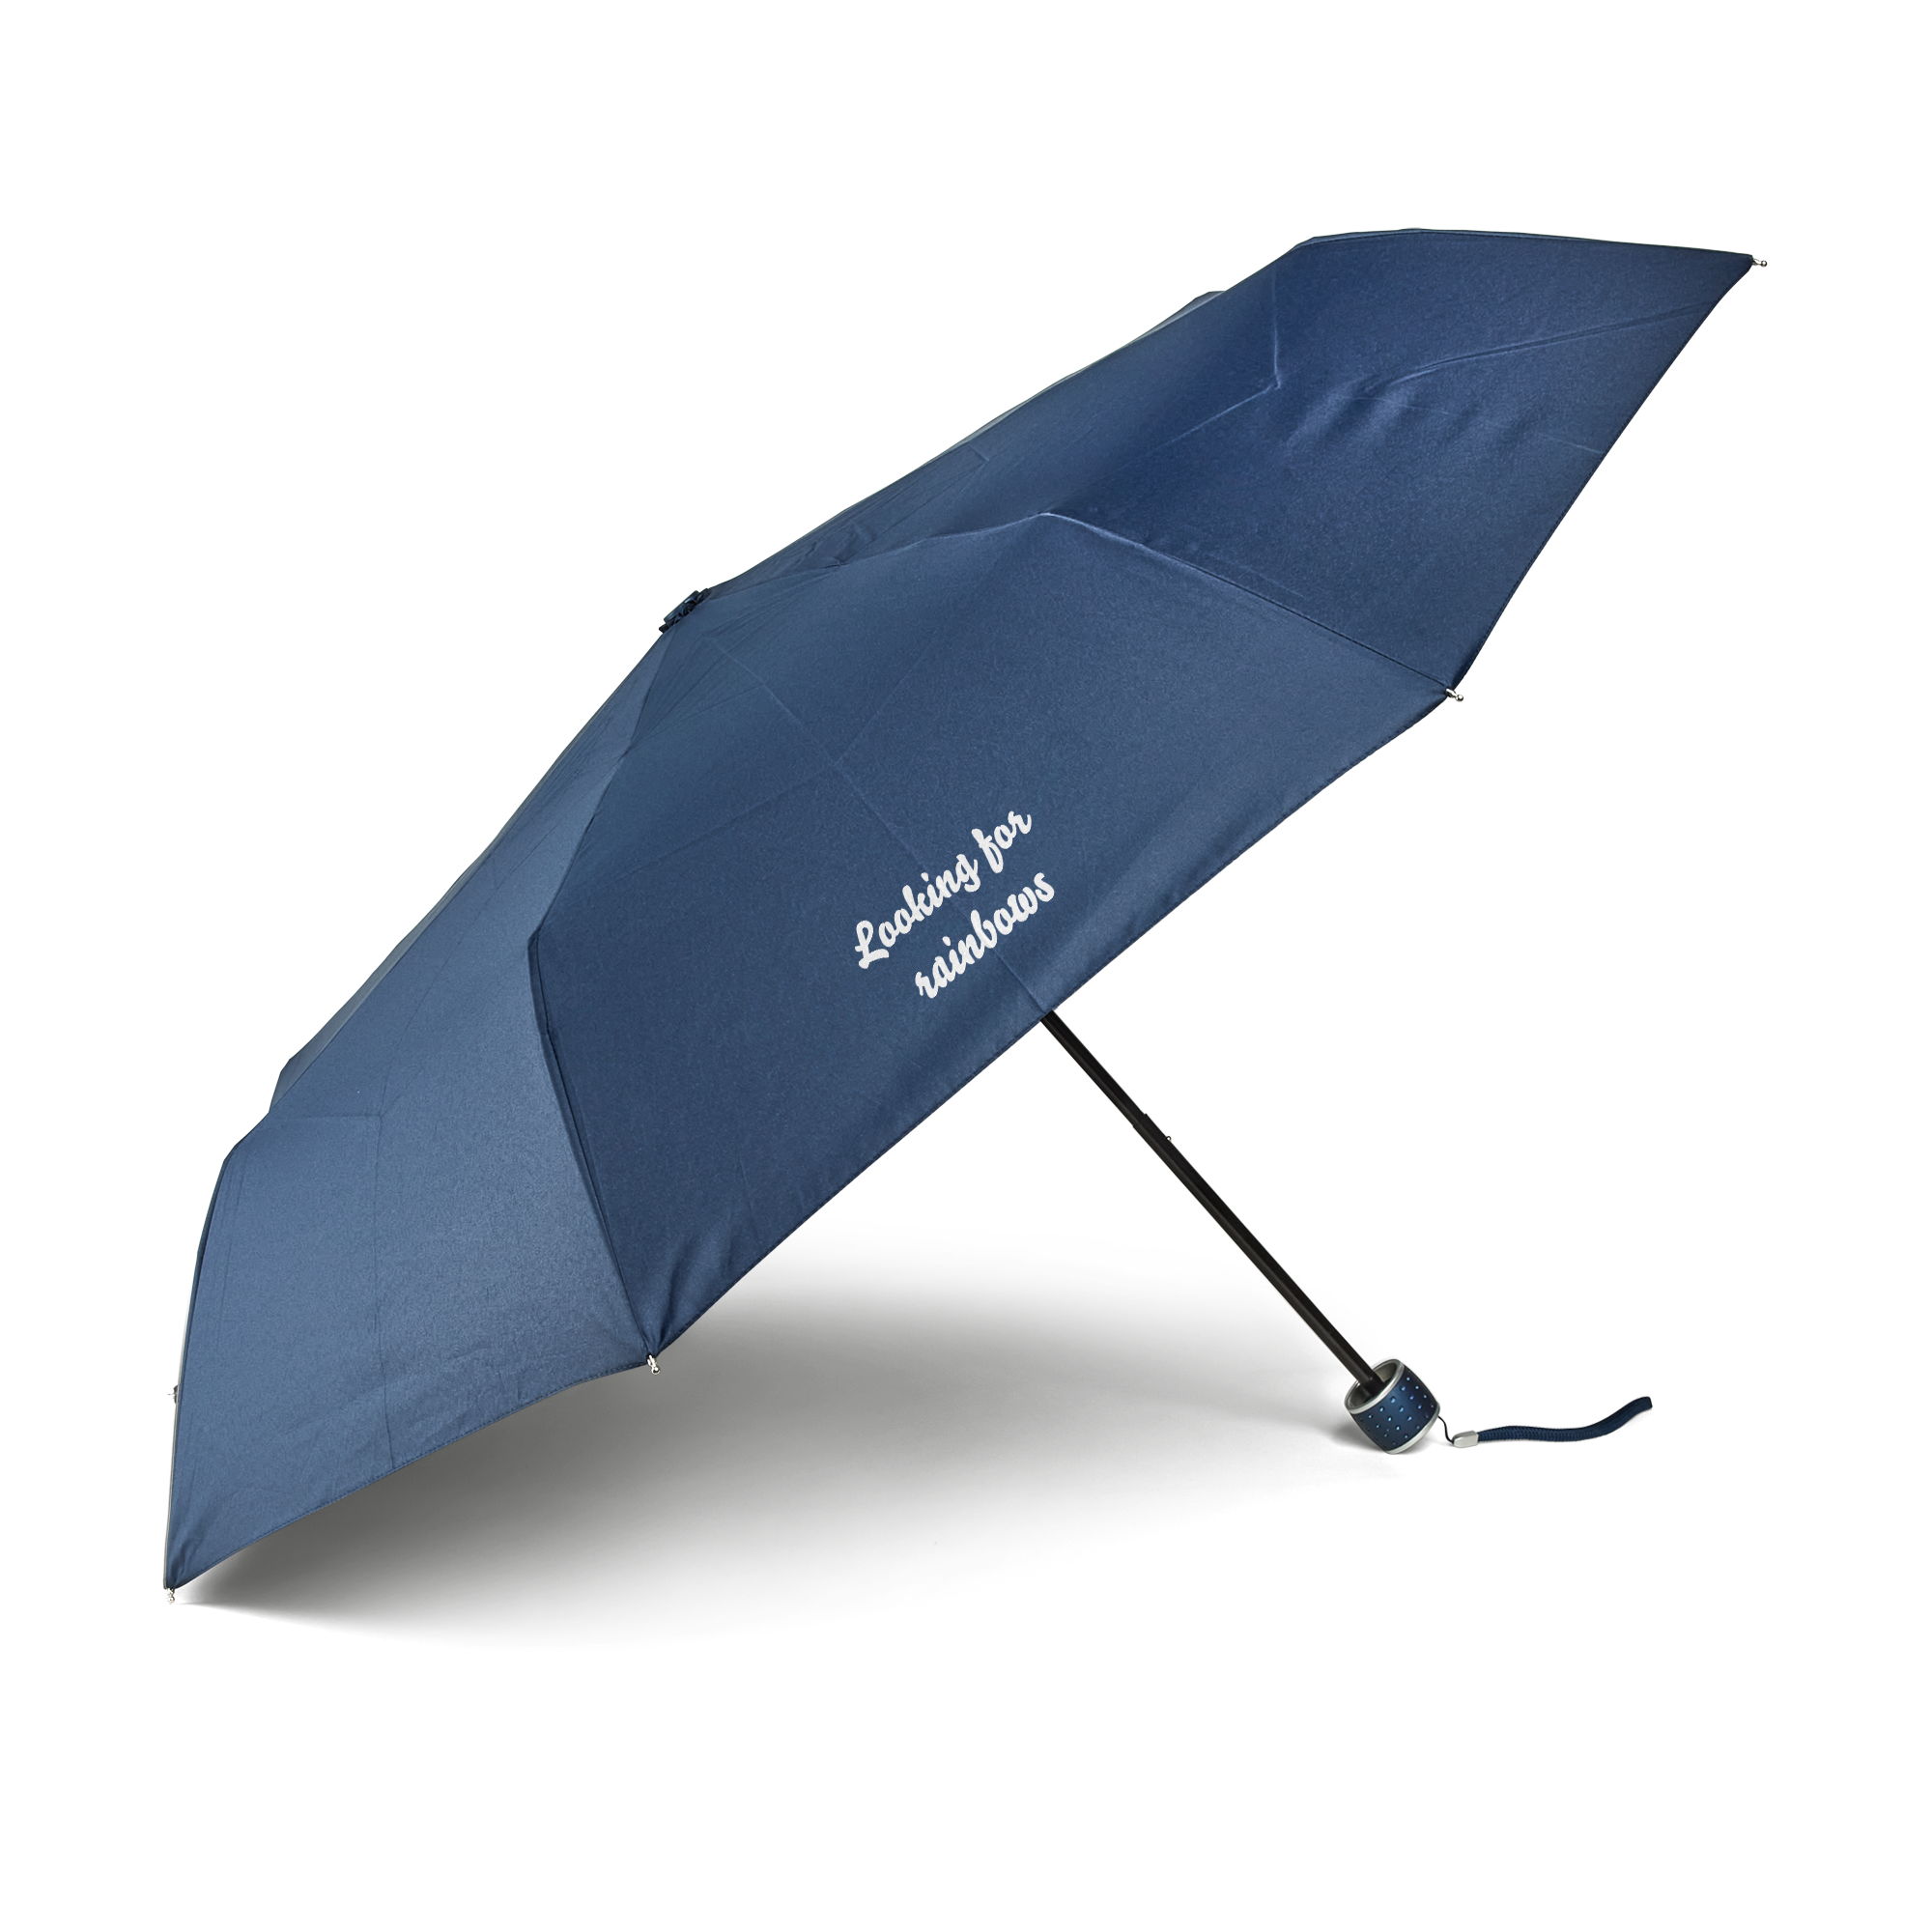 Personalised pocket umbrella - Navy blue